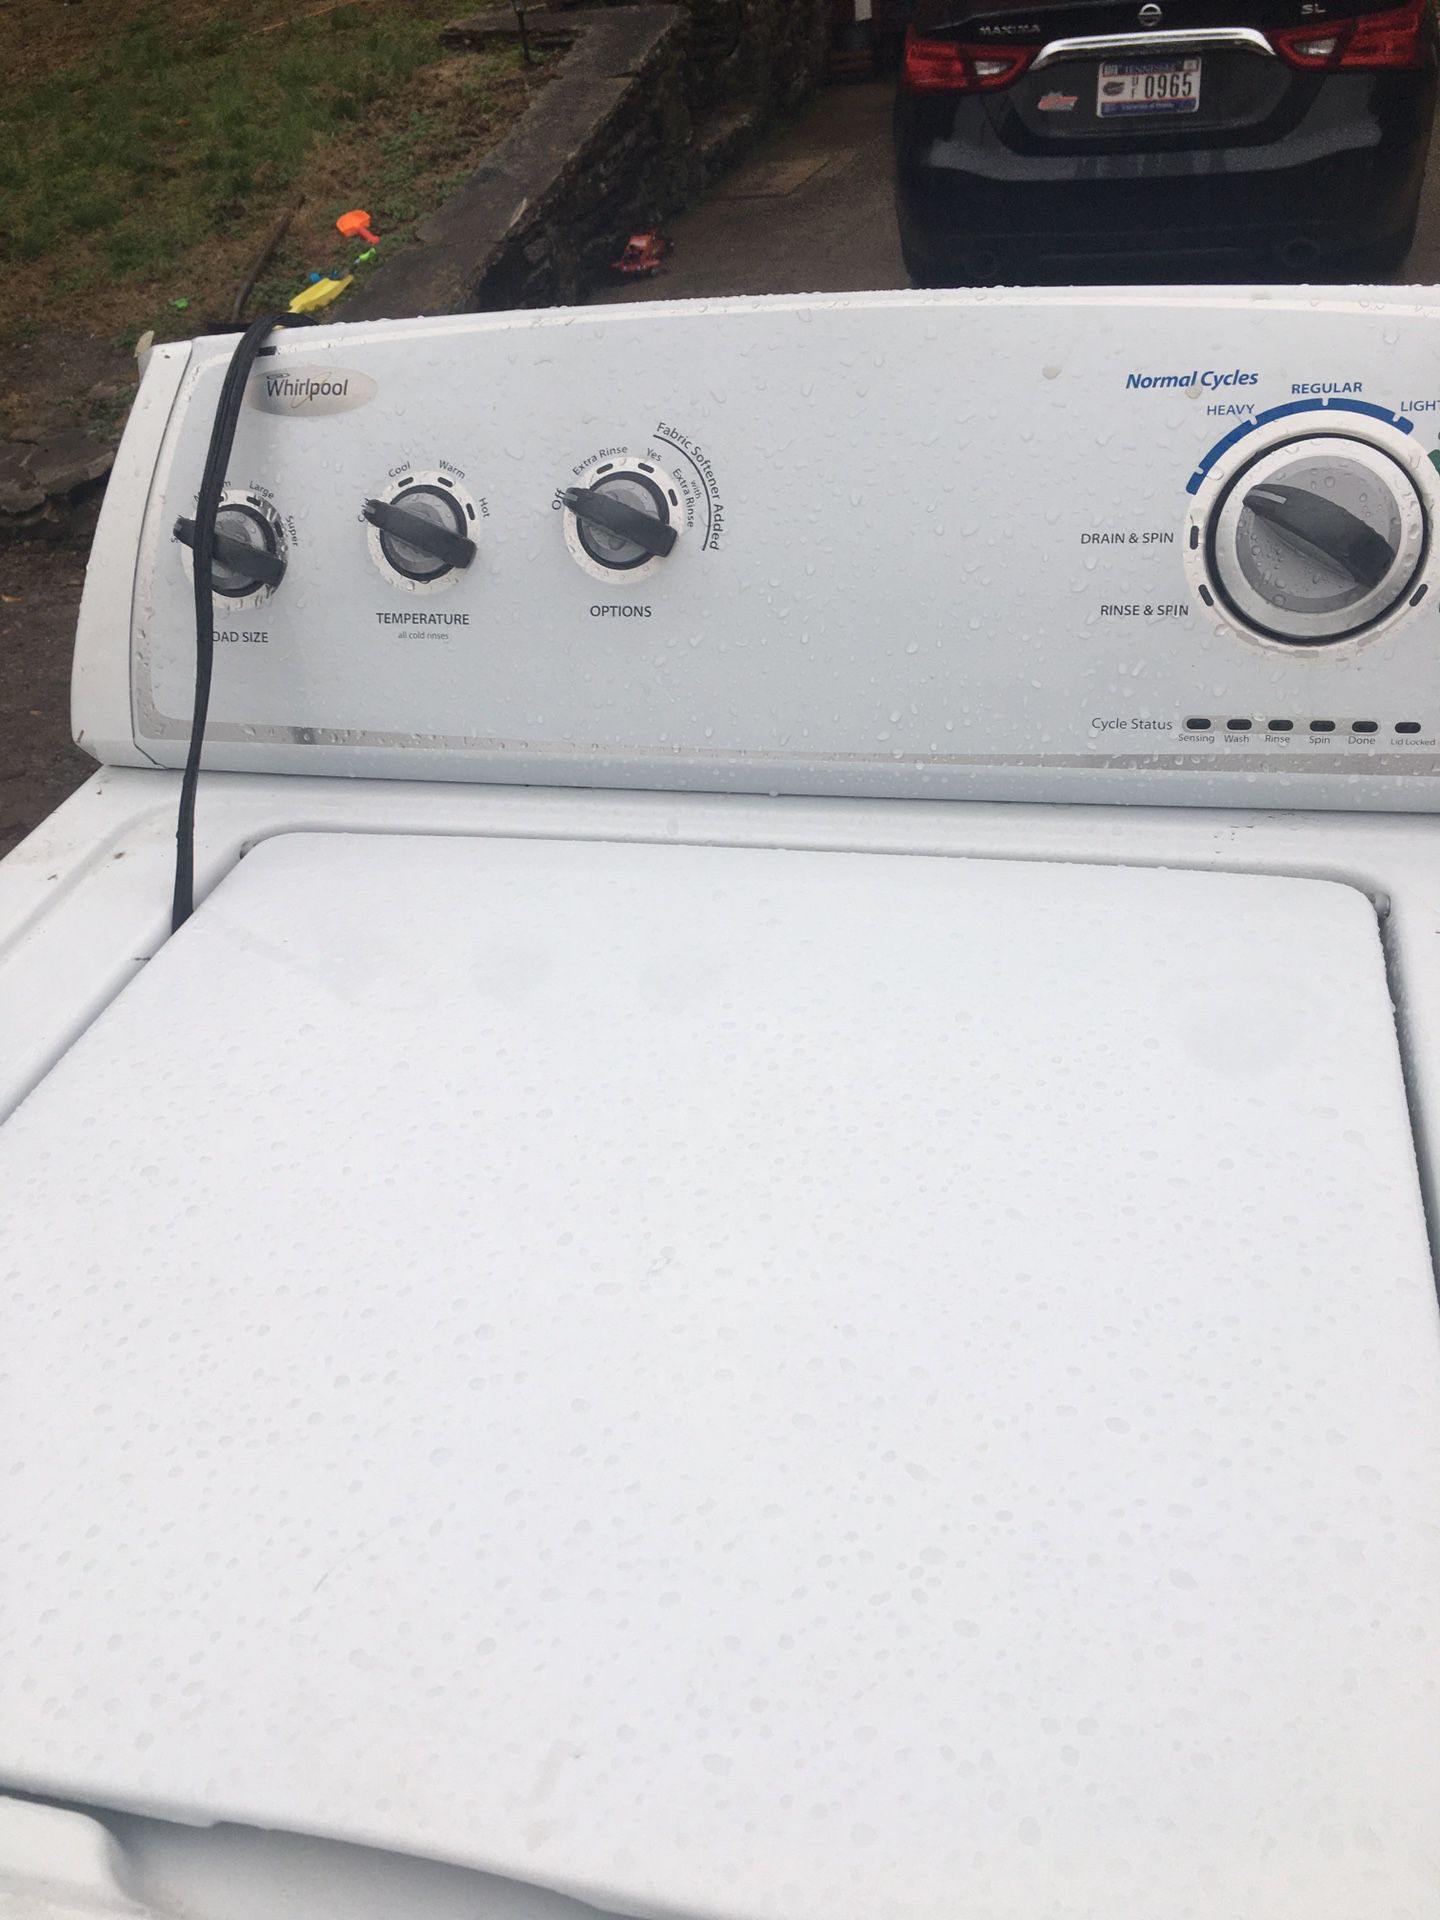 Whirlpool washer Maytag dryer